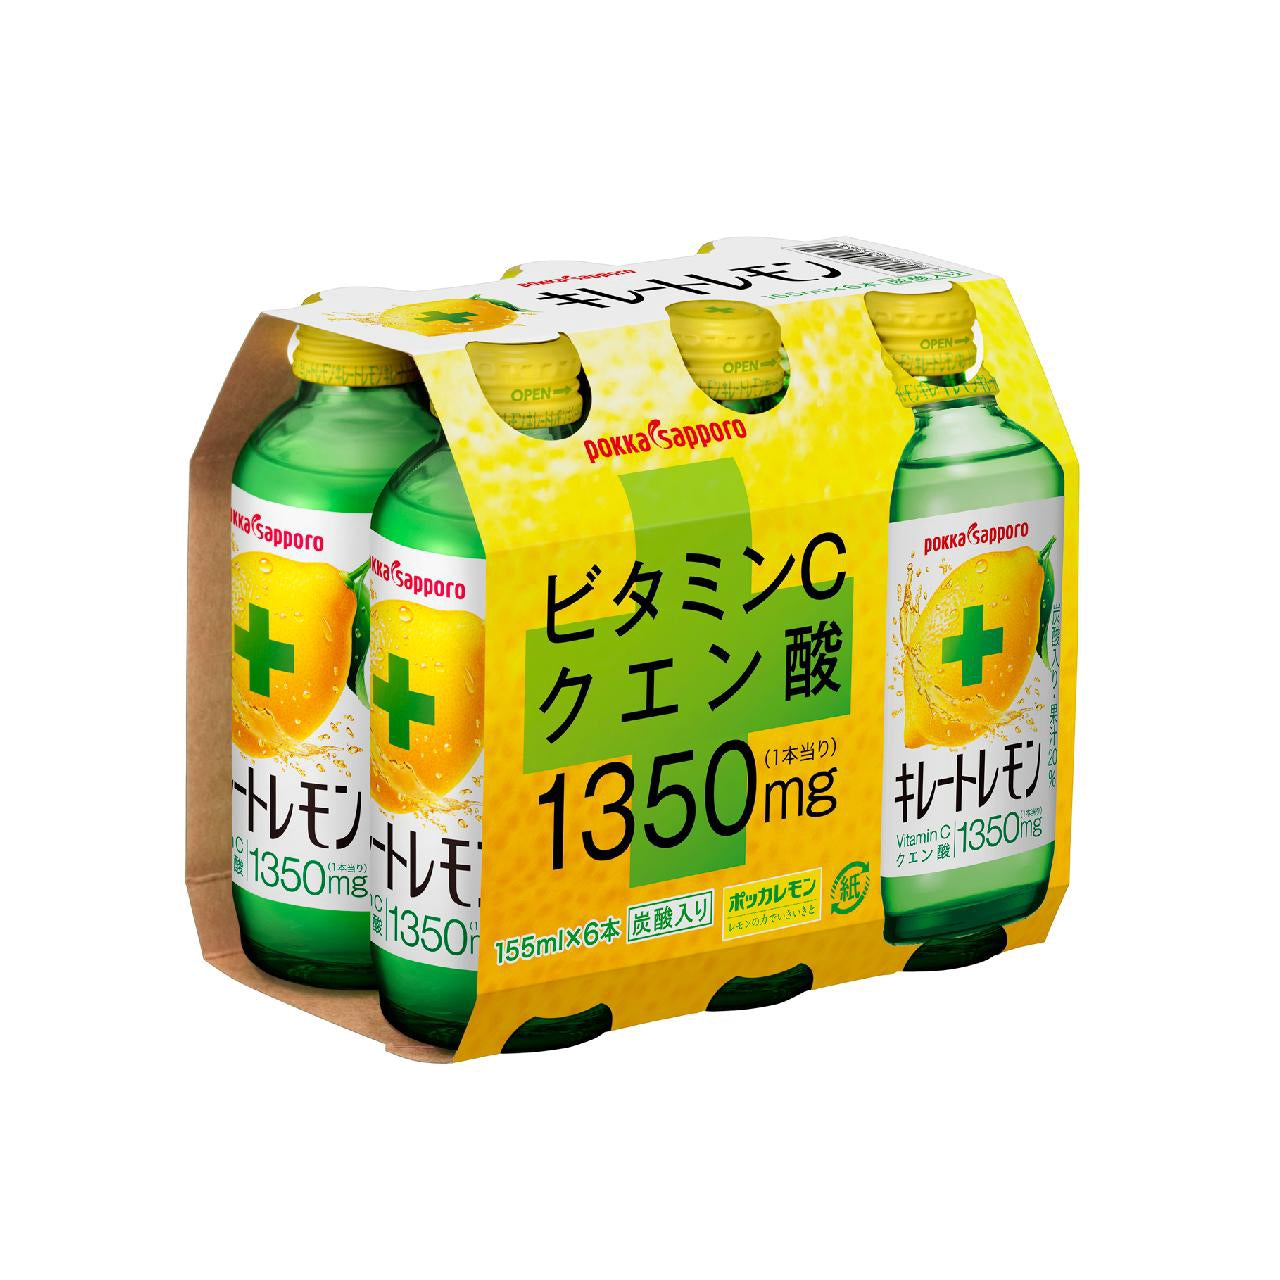 Pokka Sapporo Chelate Lemon